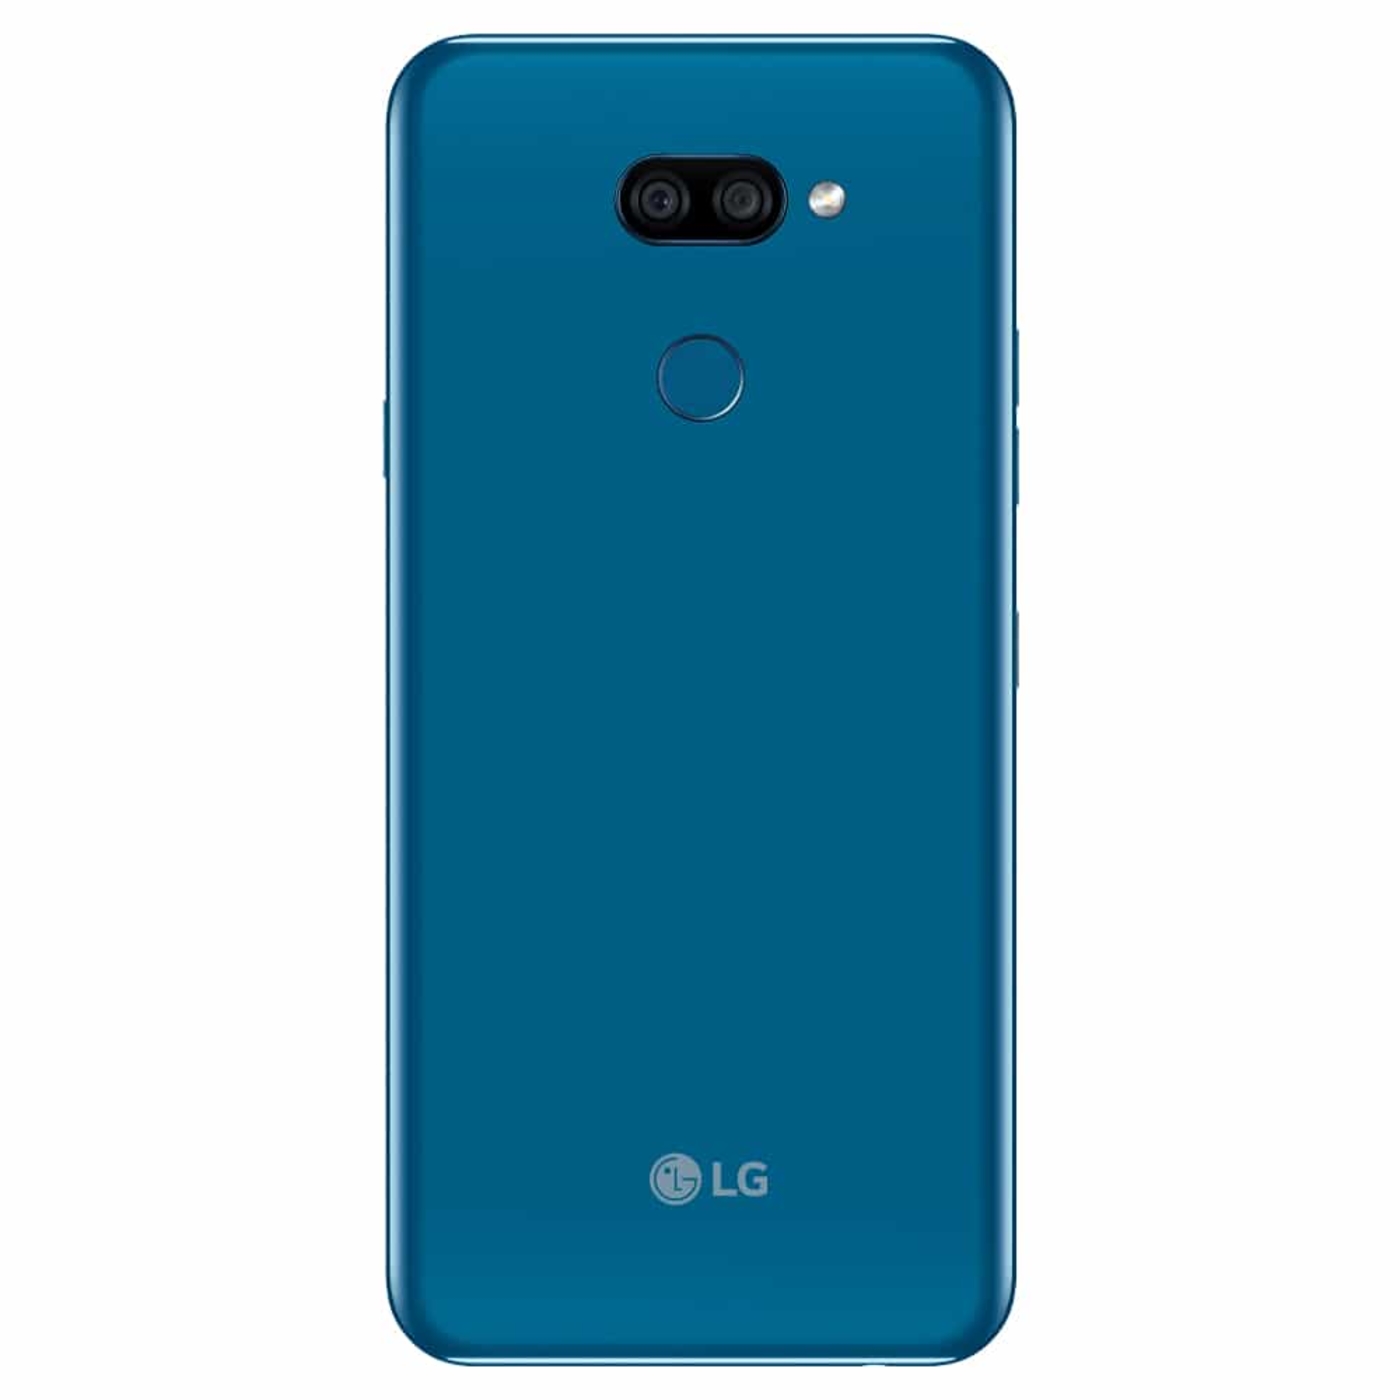 Combo Celular LG K40S 32GB Azul + Parlante PK3 + Audífonos Bluetooth HBS-SL5